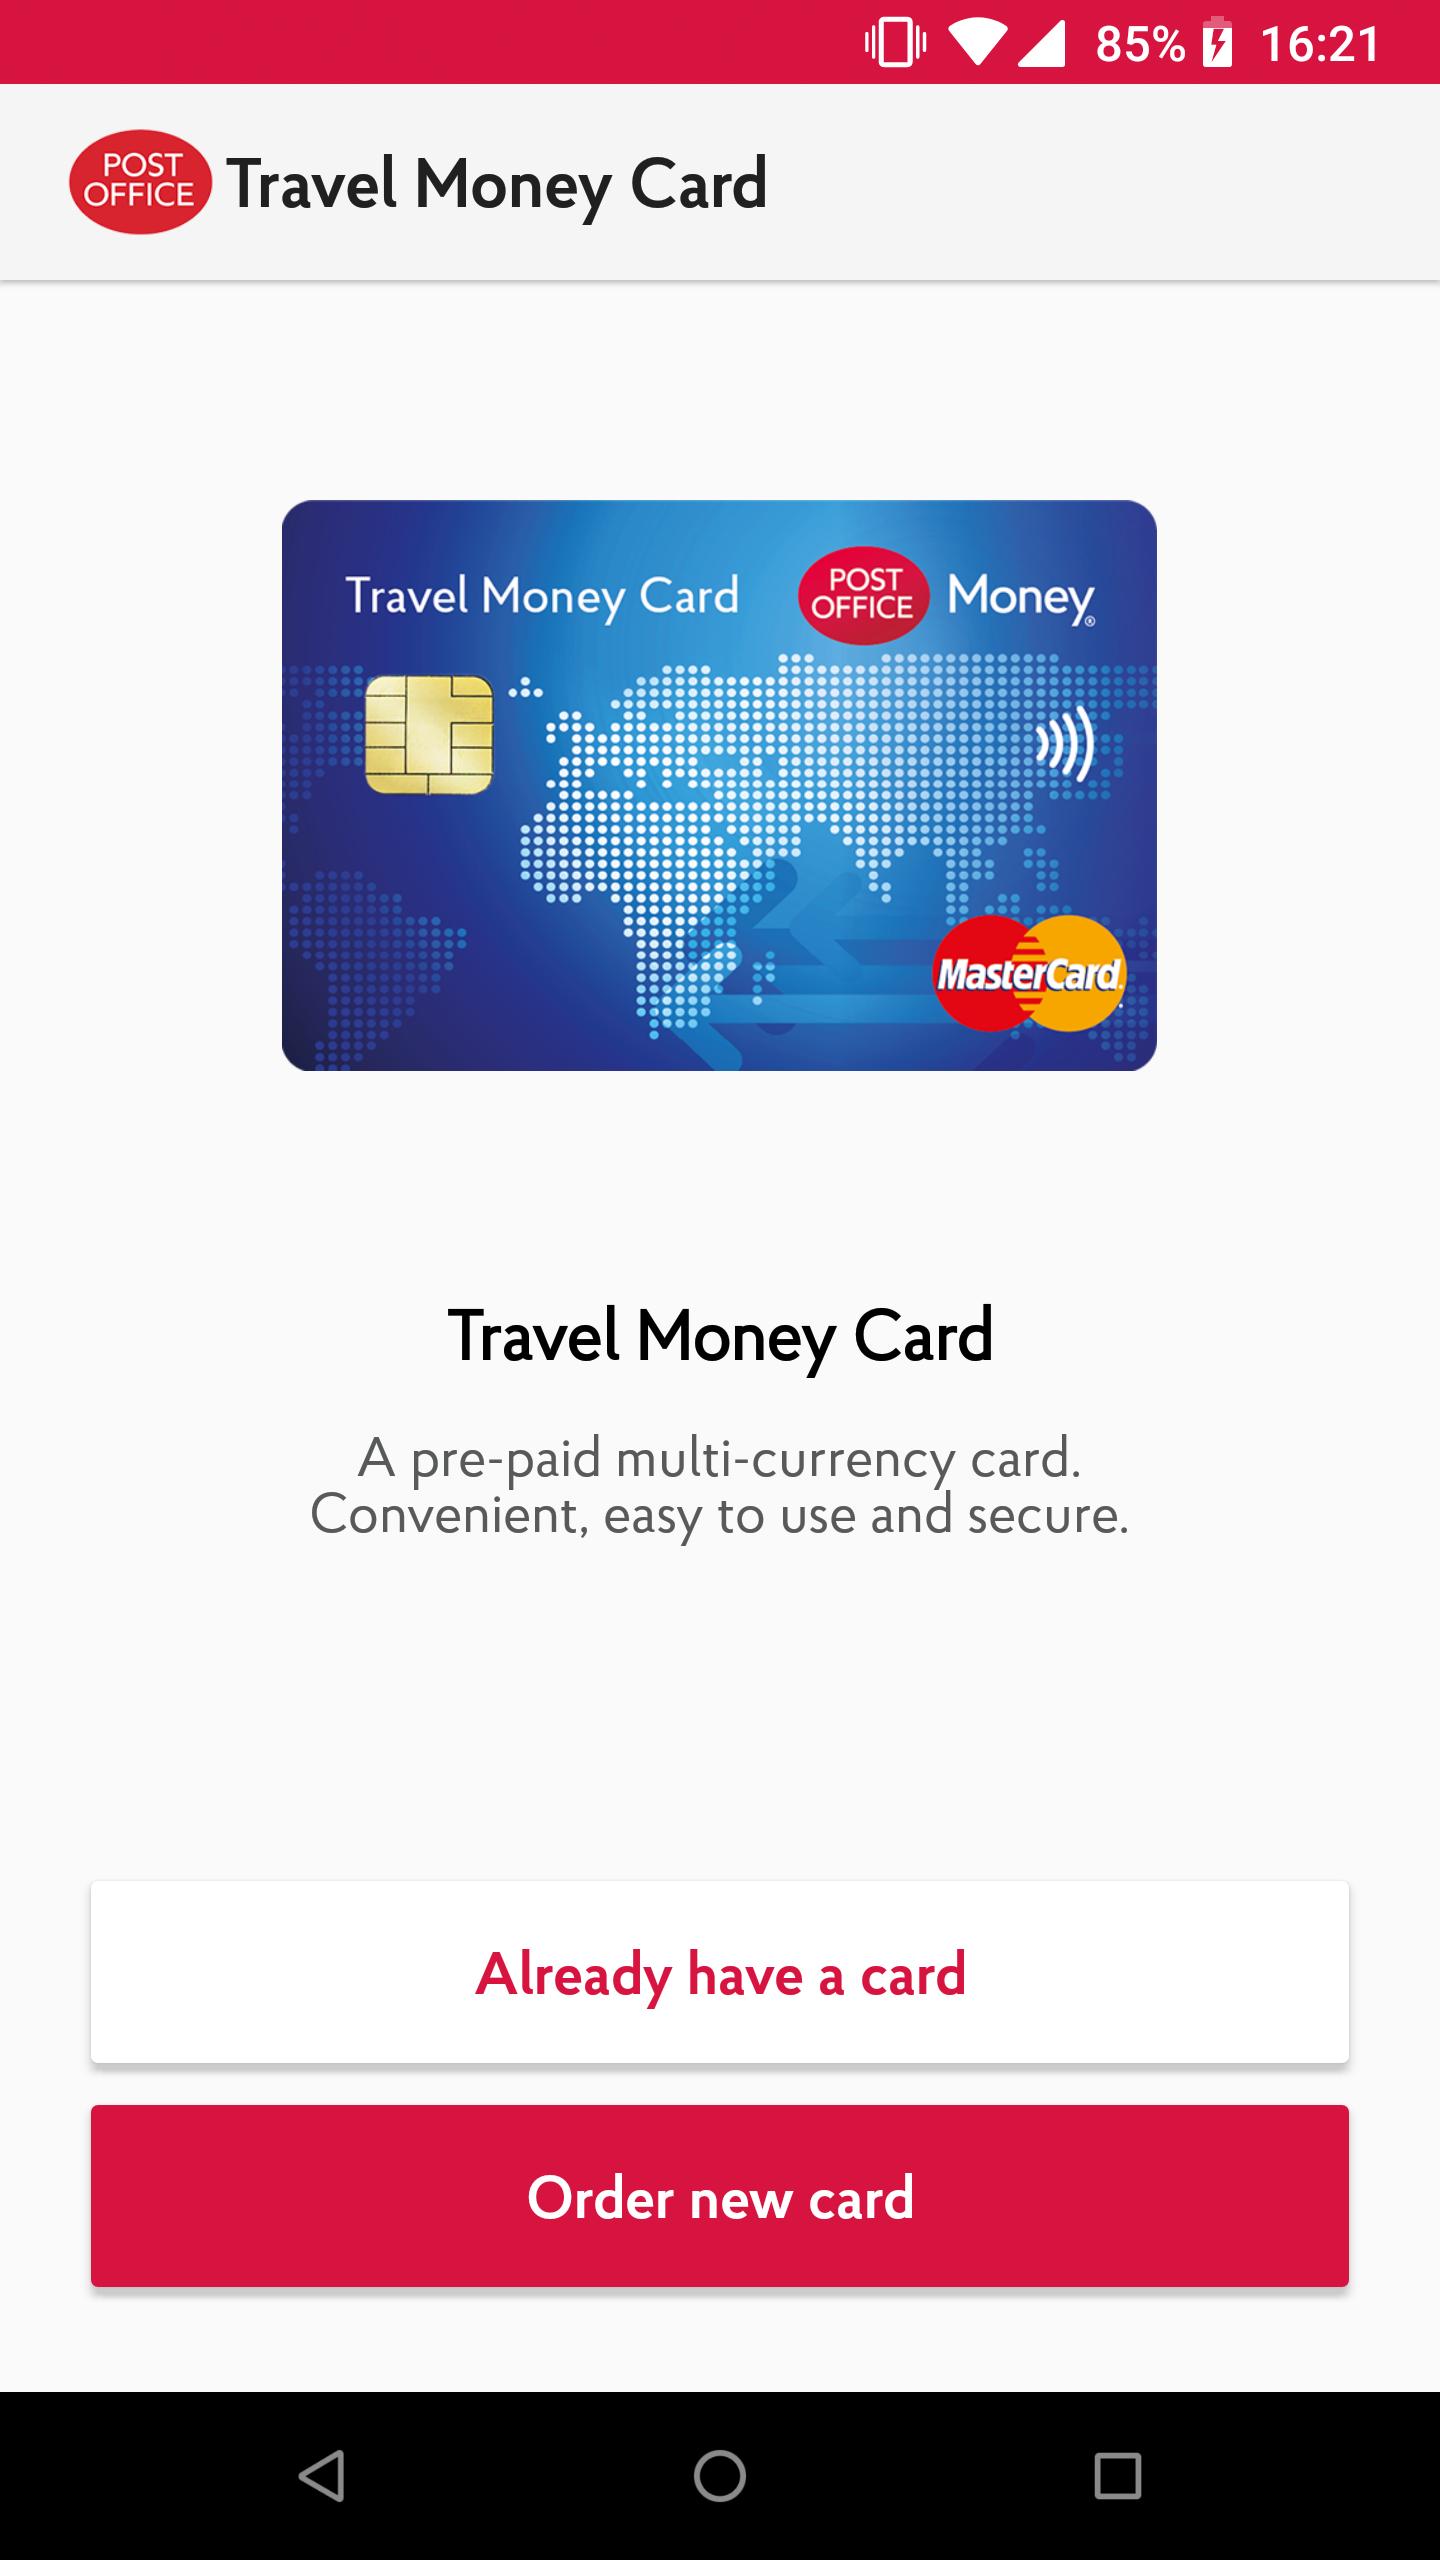 Travel money card post office